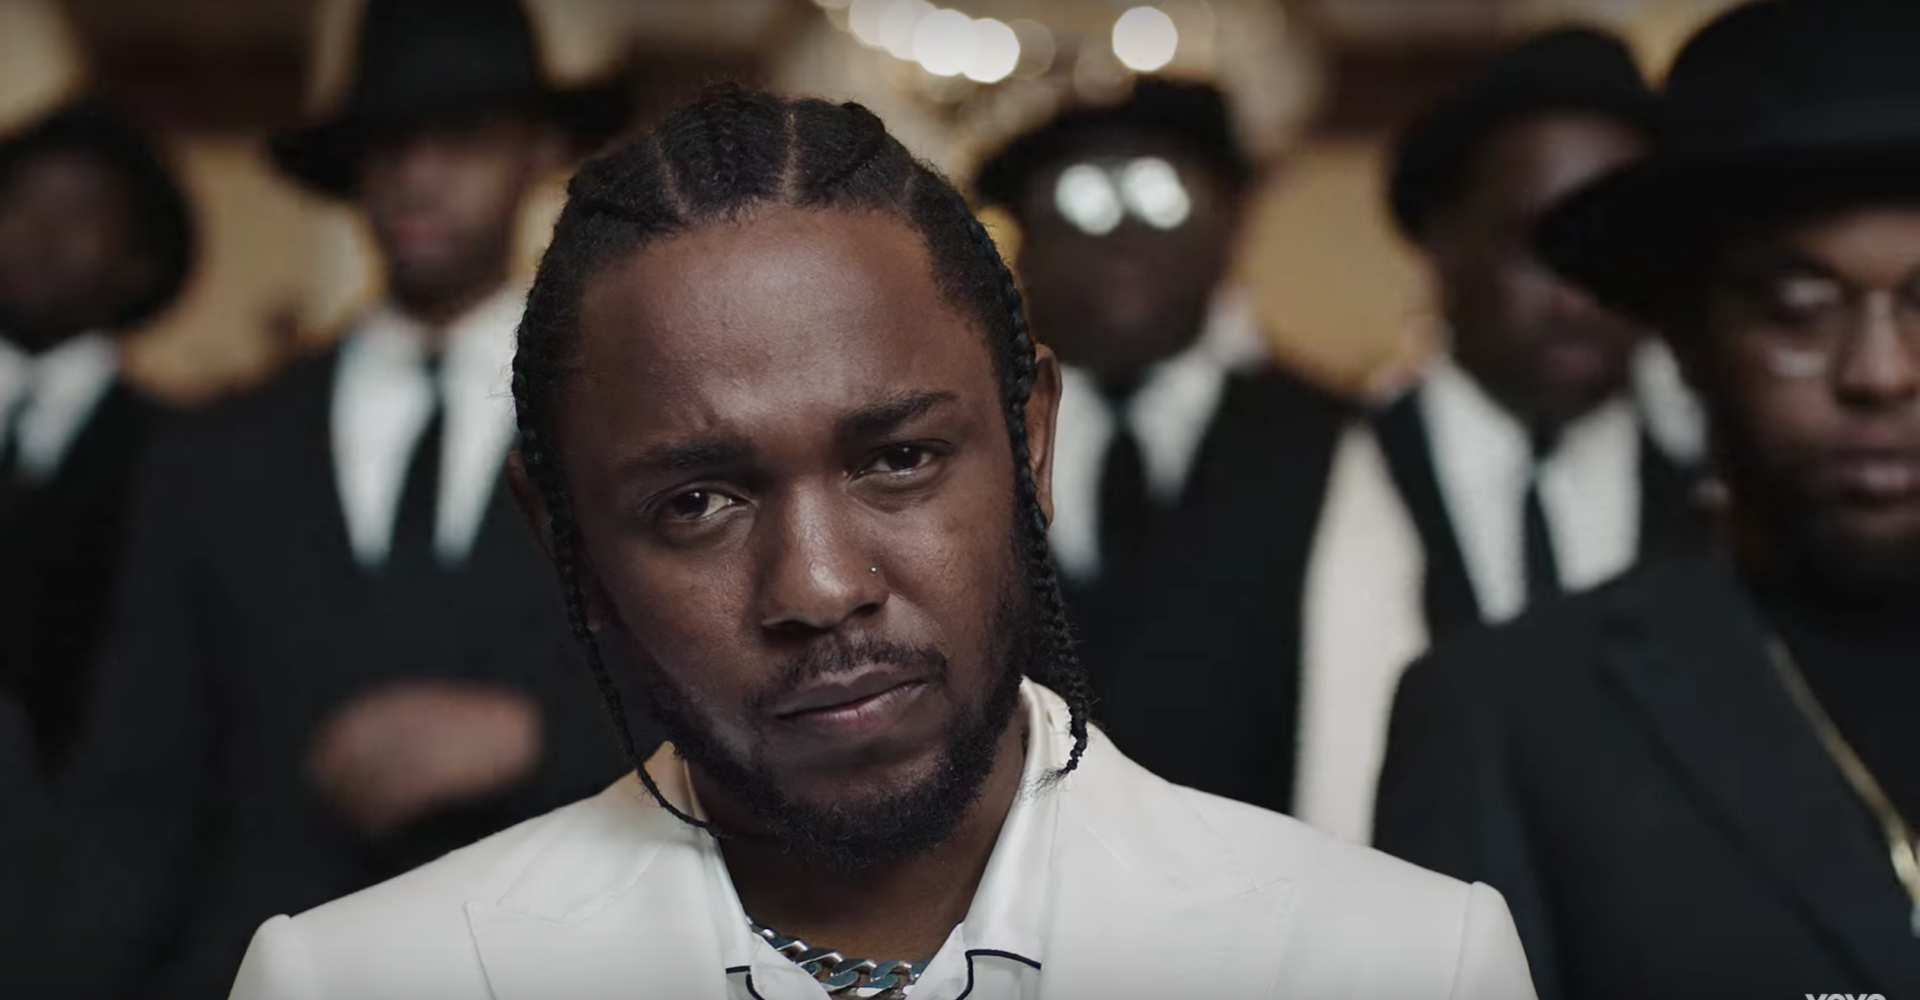 Kendrick Lamar shares details about his new album ‘DAMN.’